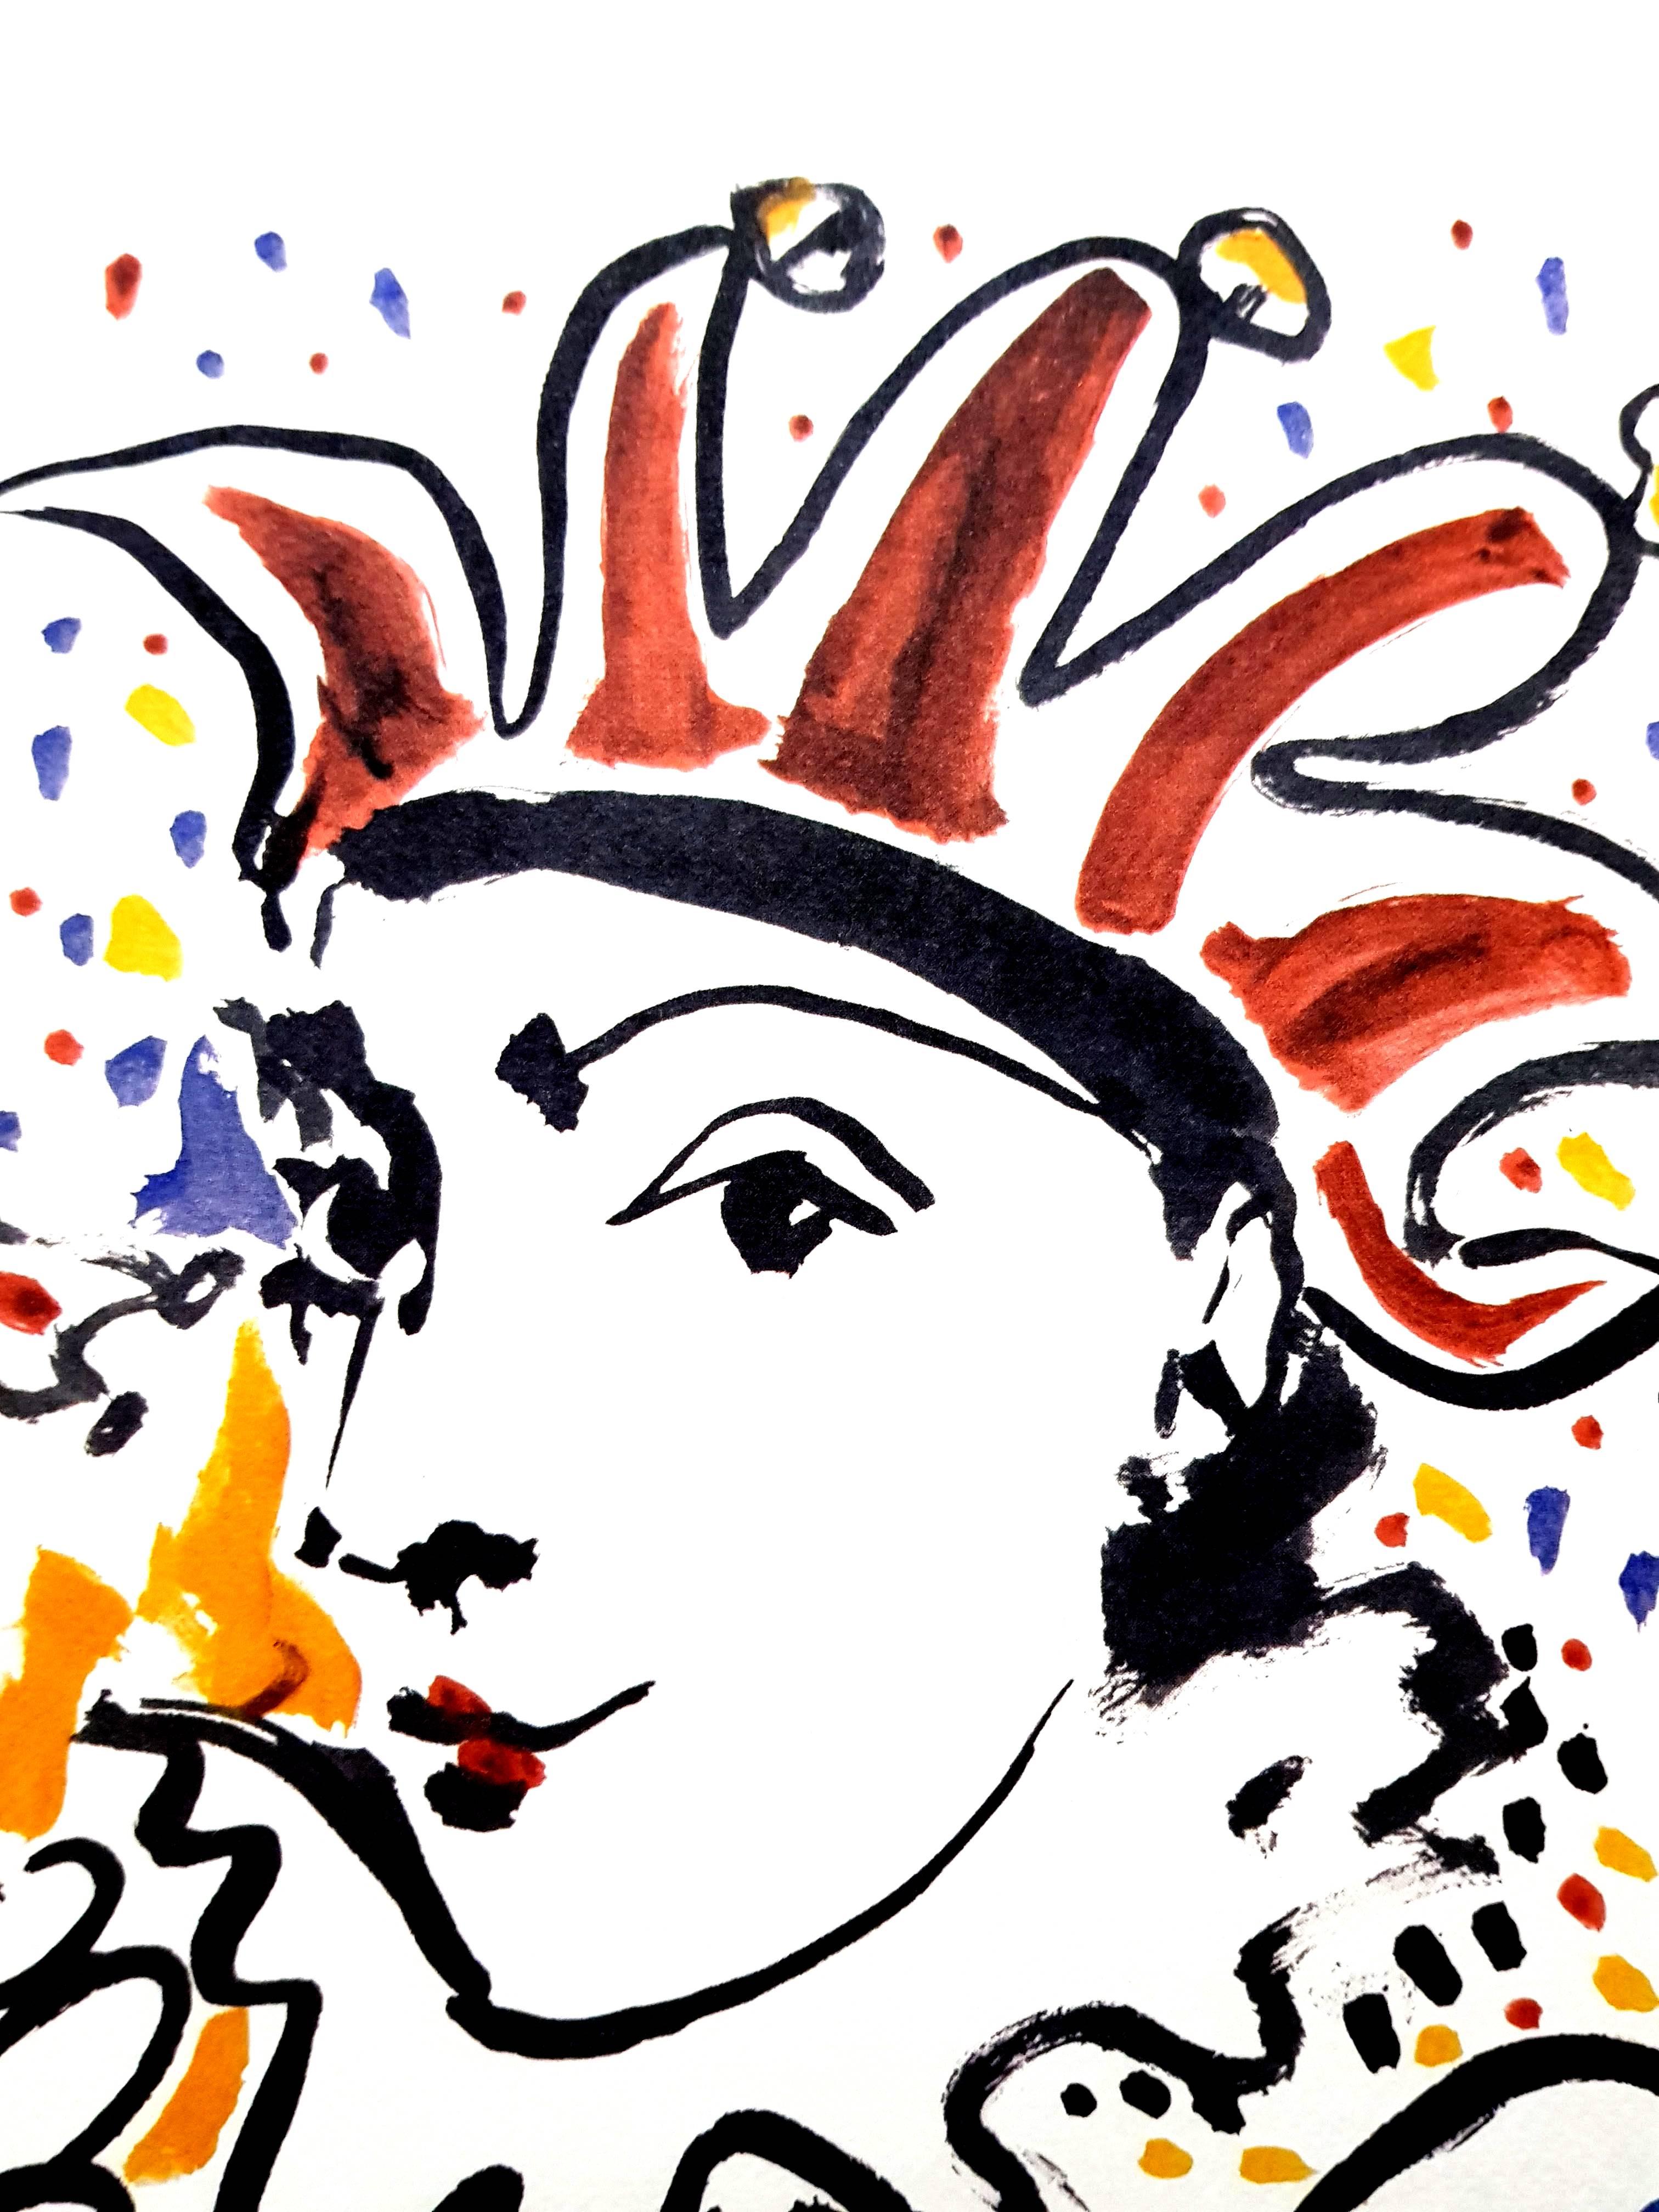 Nach Pablo Picasso – Carnaval – Lithographie (Surrealismus), Print, von (after) Pablo Picasso